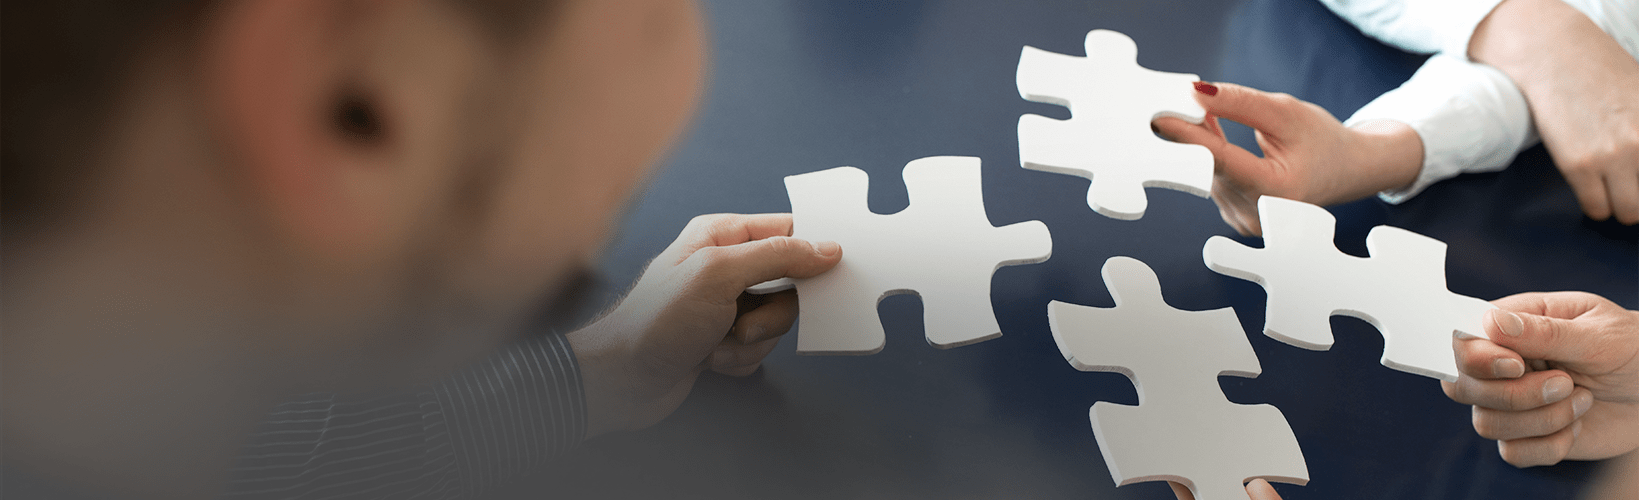 Connecting Key Enterprise Applications